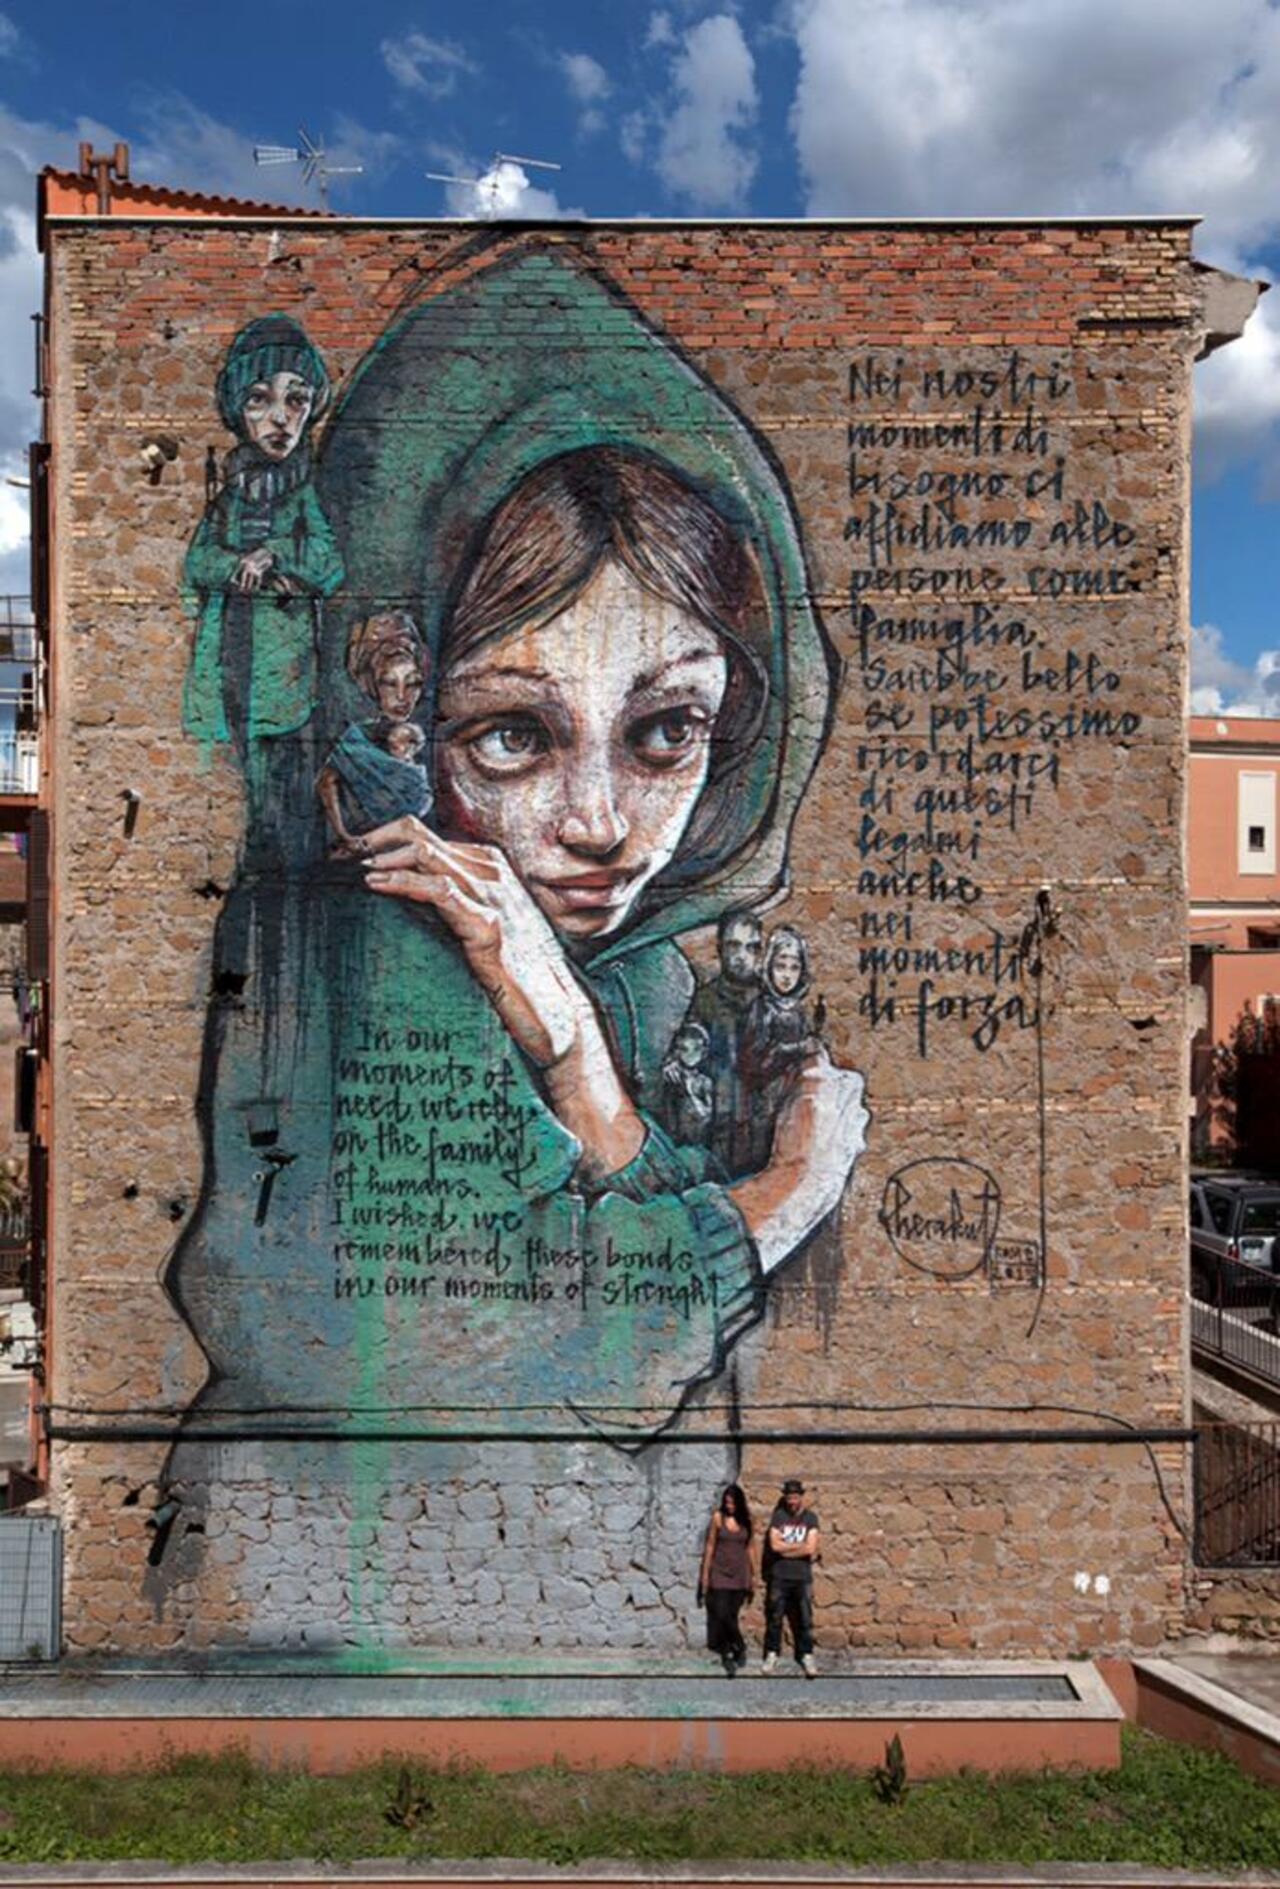 stellamariealde: RT AuKeats: #Herakut creates a new #mural in #Rome #Italy #switch #streetart #graffiti #bediffere… http://t.co/CkgXx6pajW